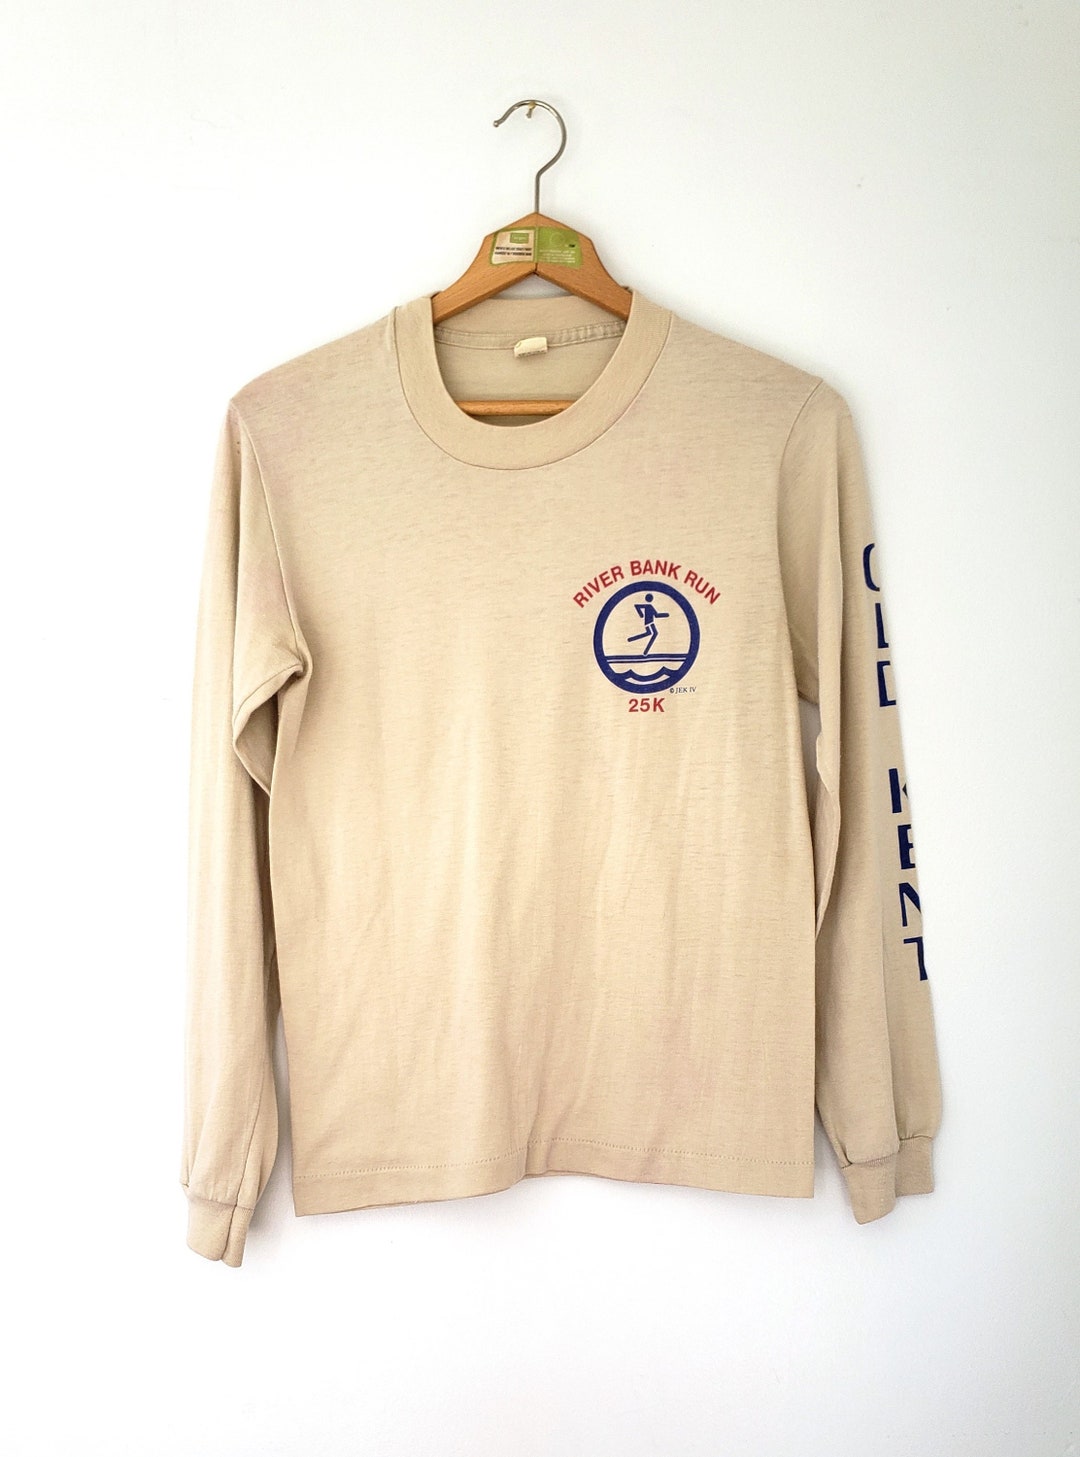 Vintage 80s 25K Riverbank Run Long Sleeve Tshirt - Etsy